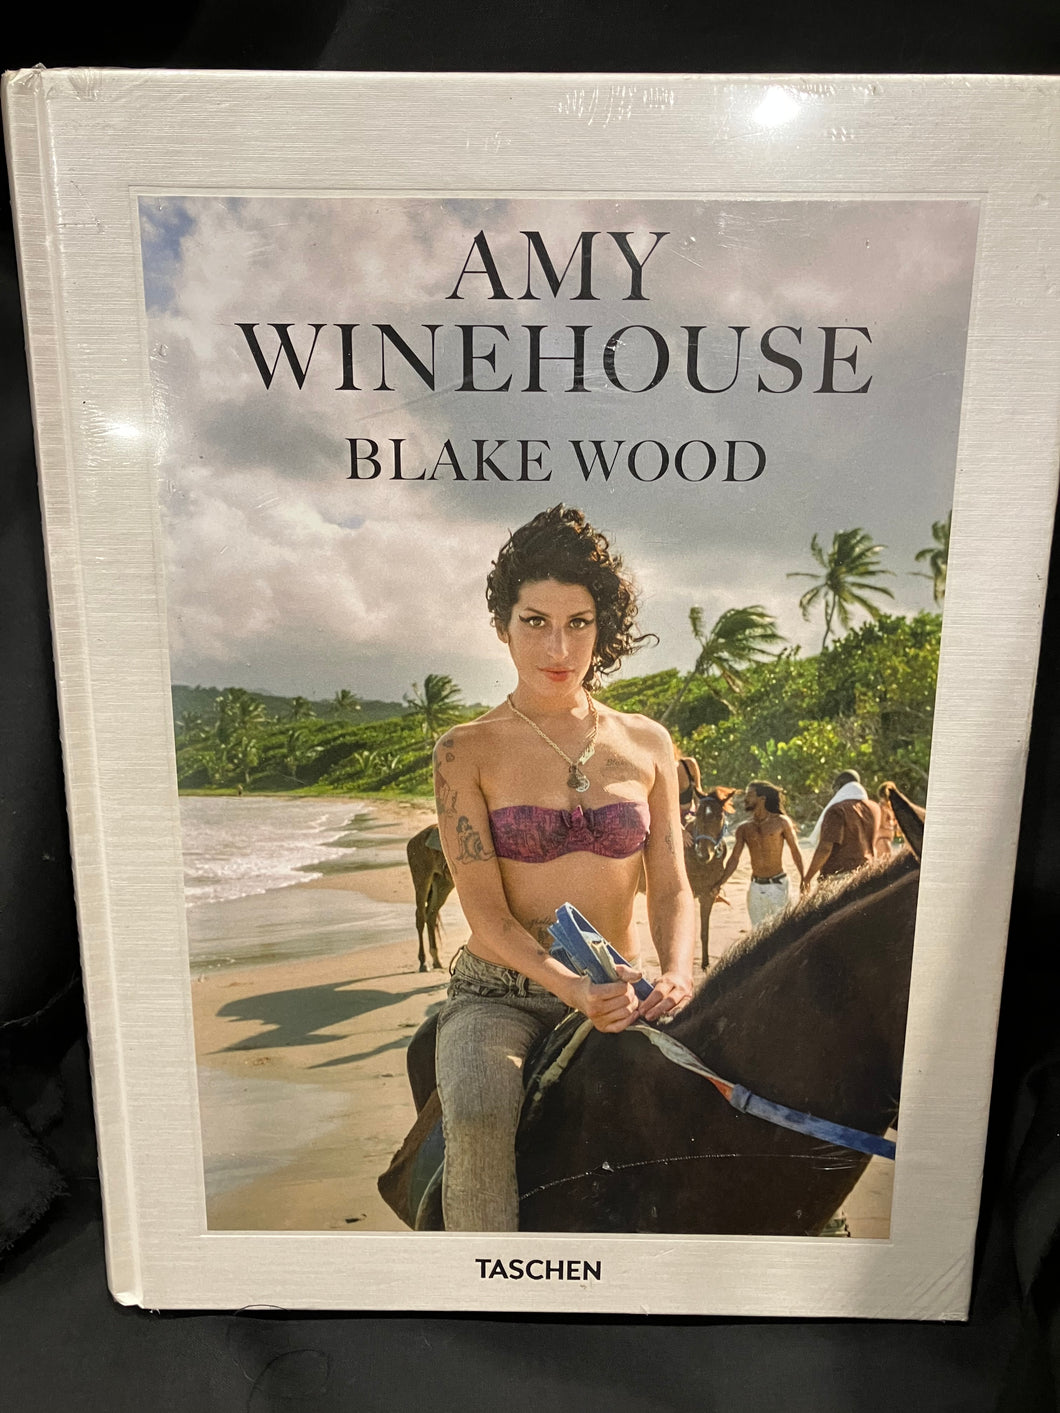 AMY WINEHOUSE - BLAKE WOOD - TASCHEN - HARDCOVER BOOK - SEALED